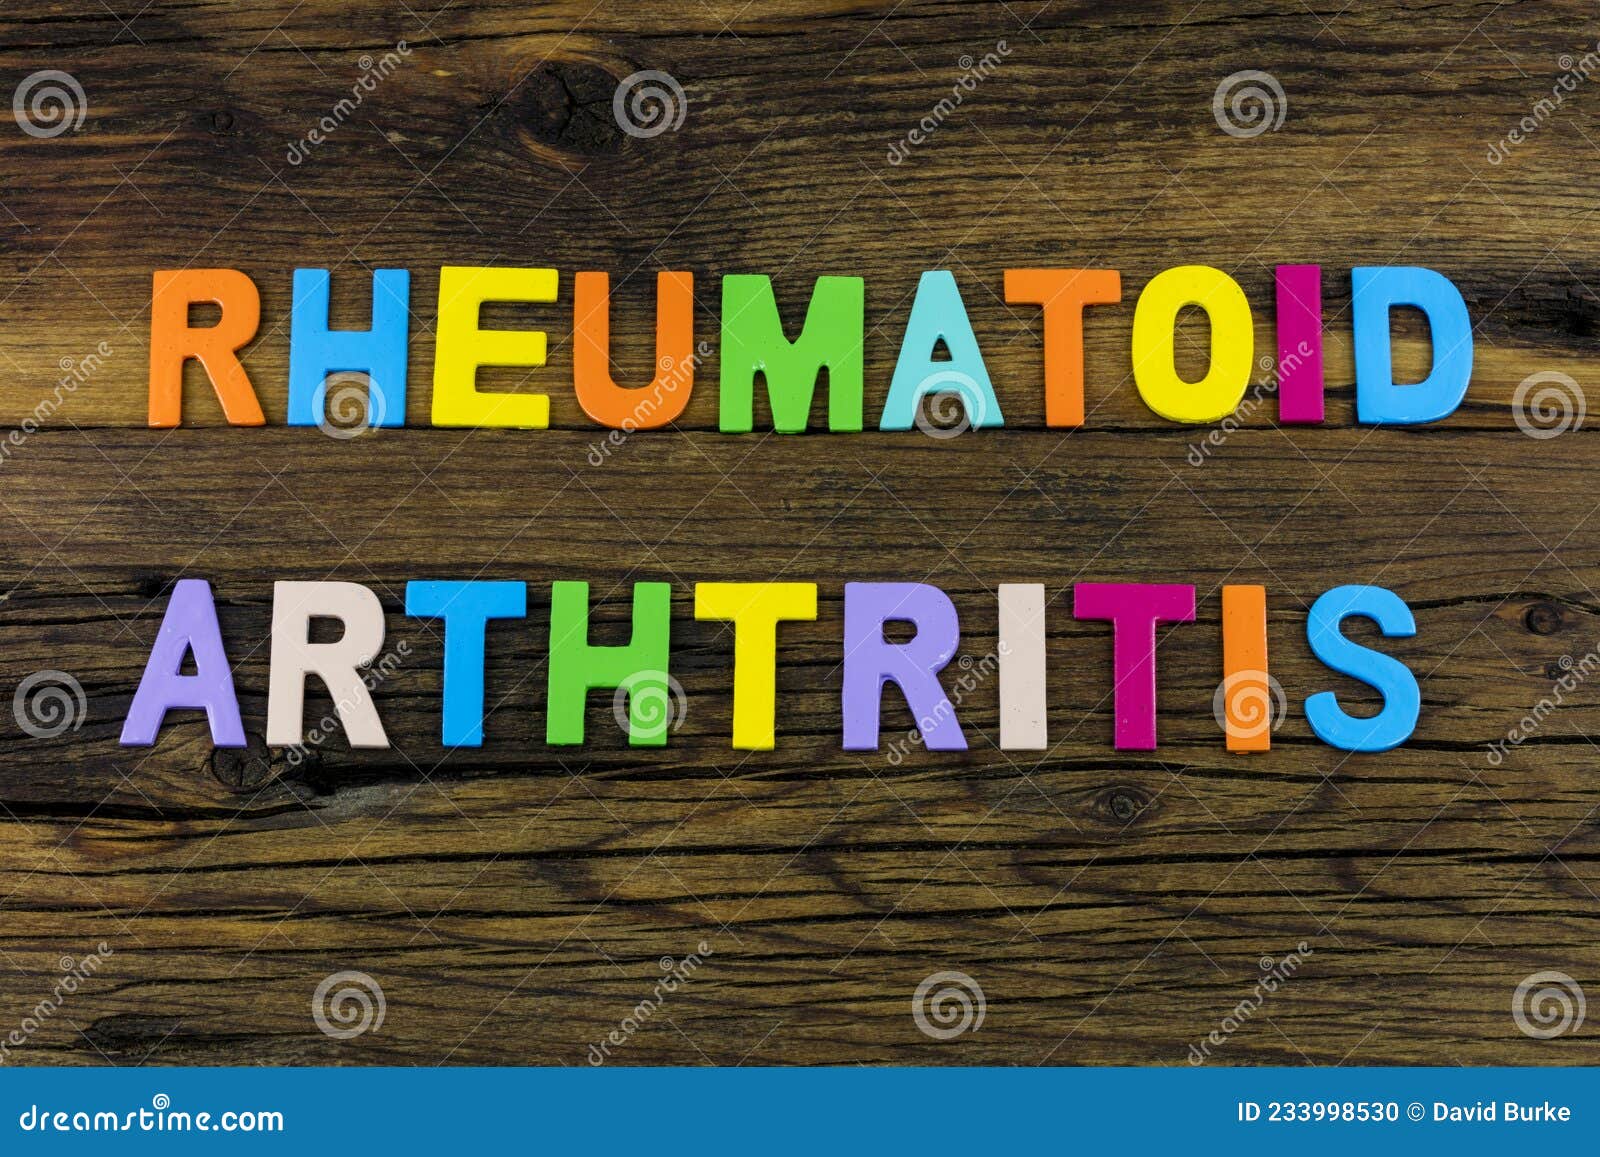 rheumatoid arthritis disease medical joint pain osteoarthritis chronic inflammation rheumatism